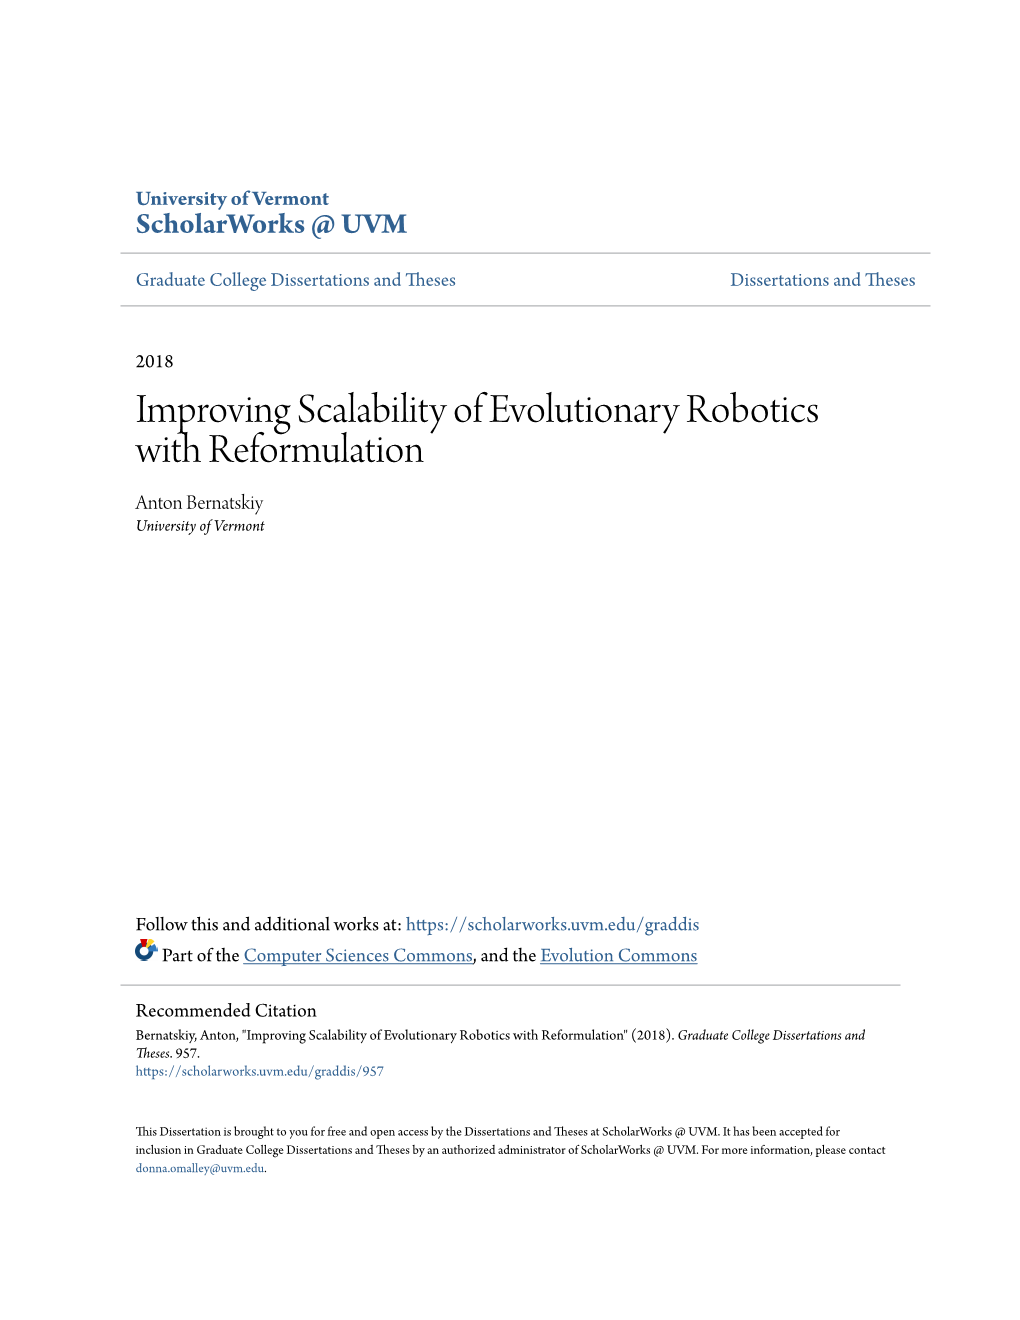 Improving Scalability of Evolutionary Robotics with Reformulation Anton Bernatskiy University of Vermont